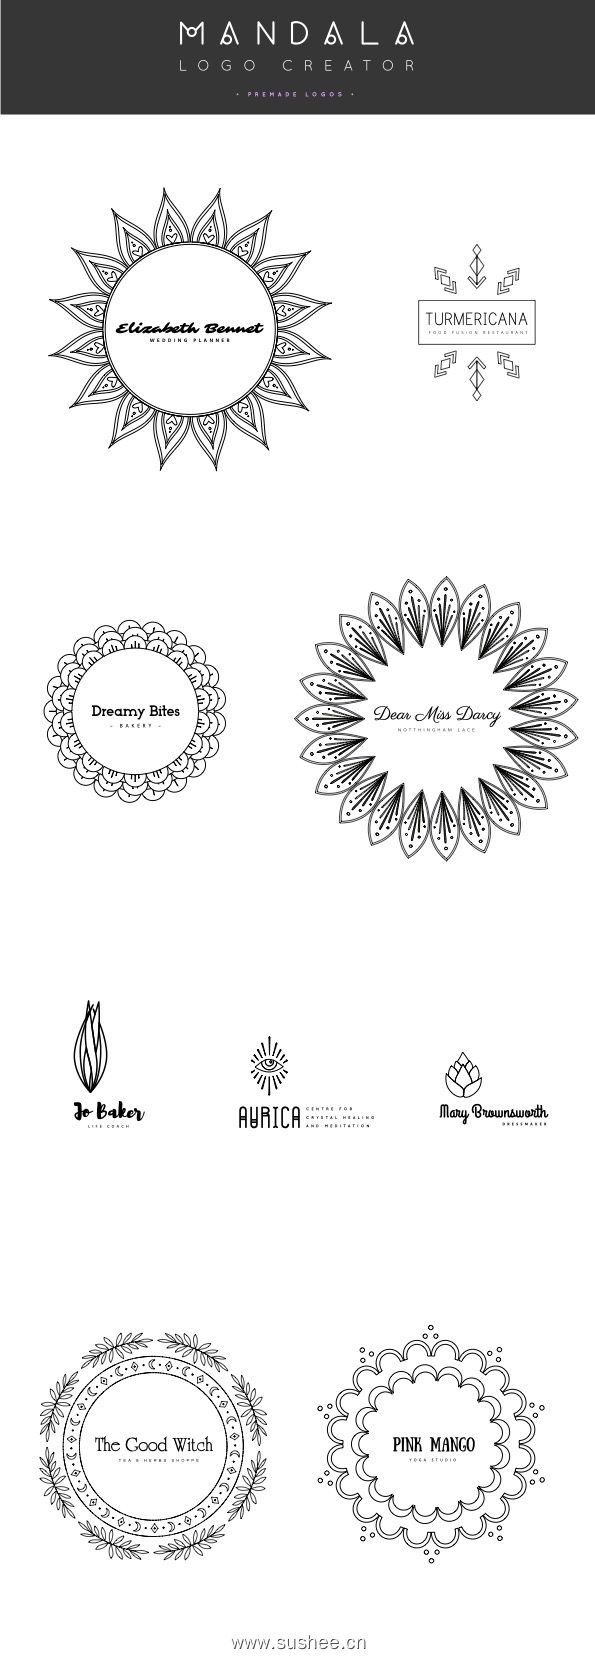 30-Premade-Logos-PDF3